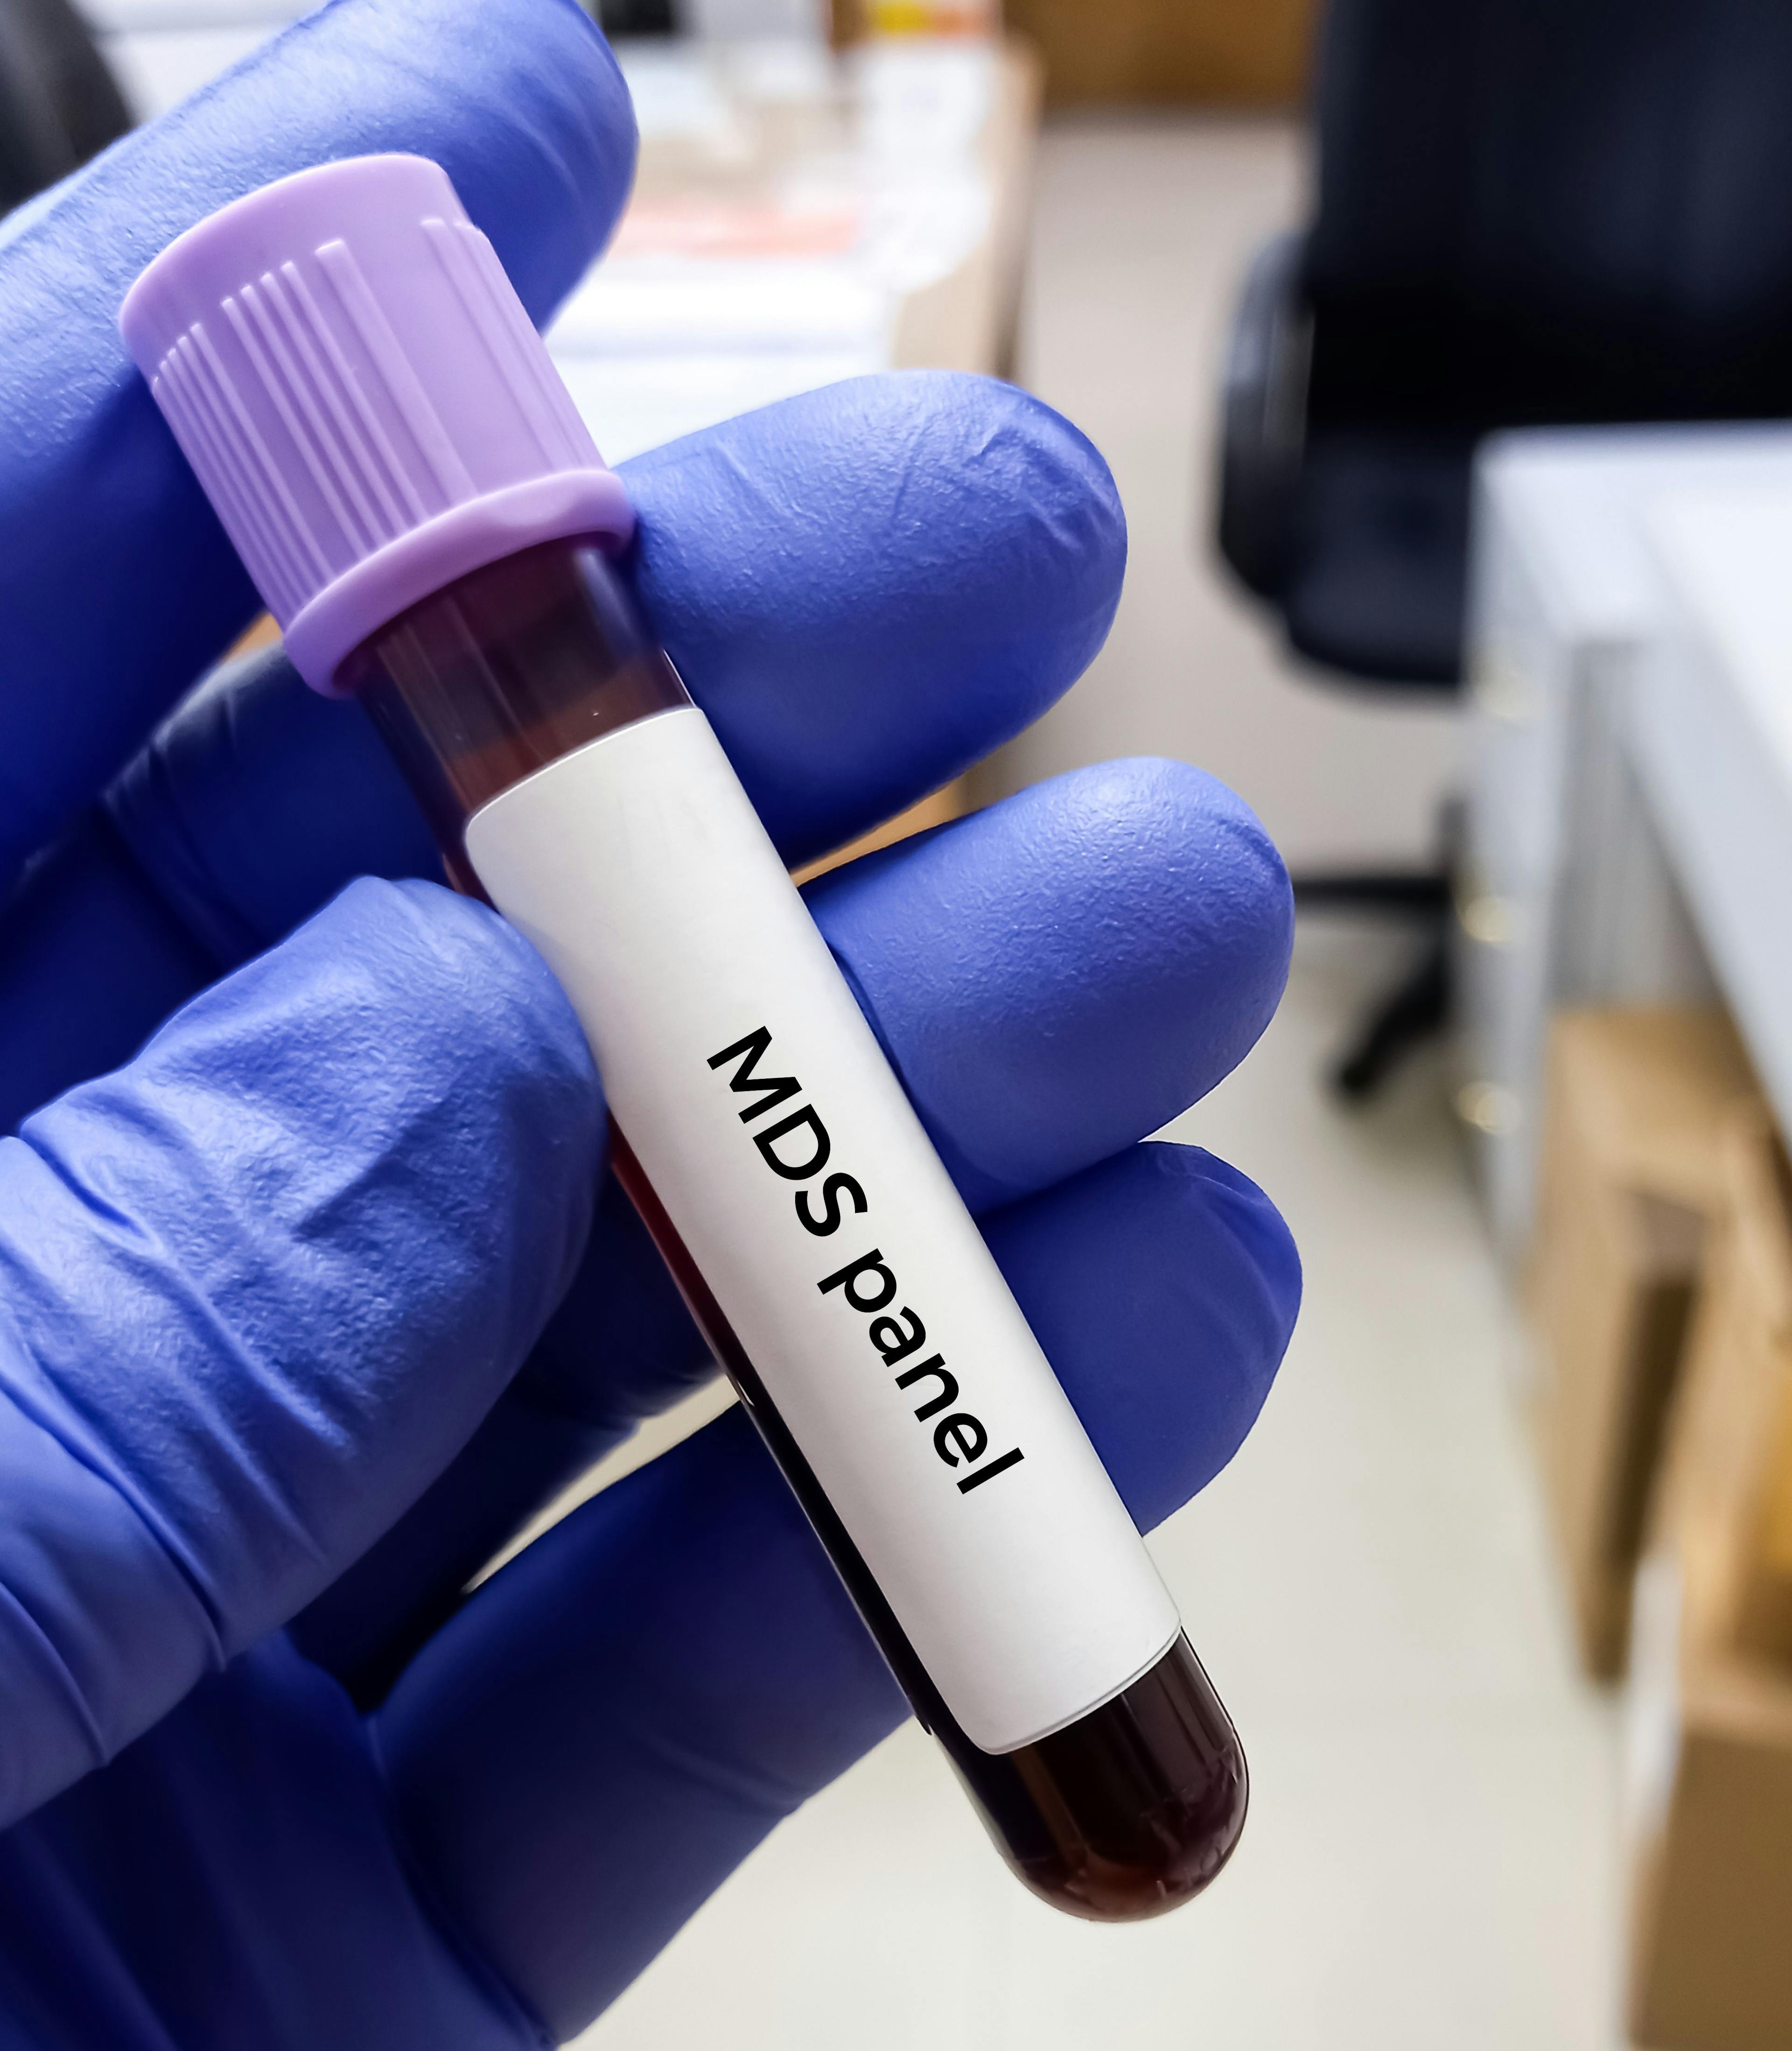 Blood sample for MDS test | Image credit: MdBabul - stock.adobe.com